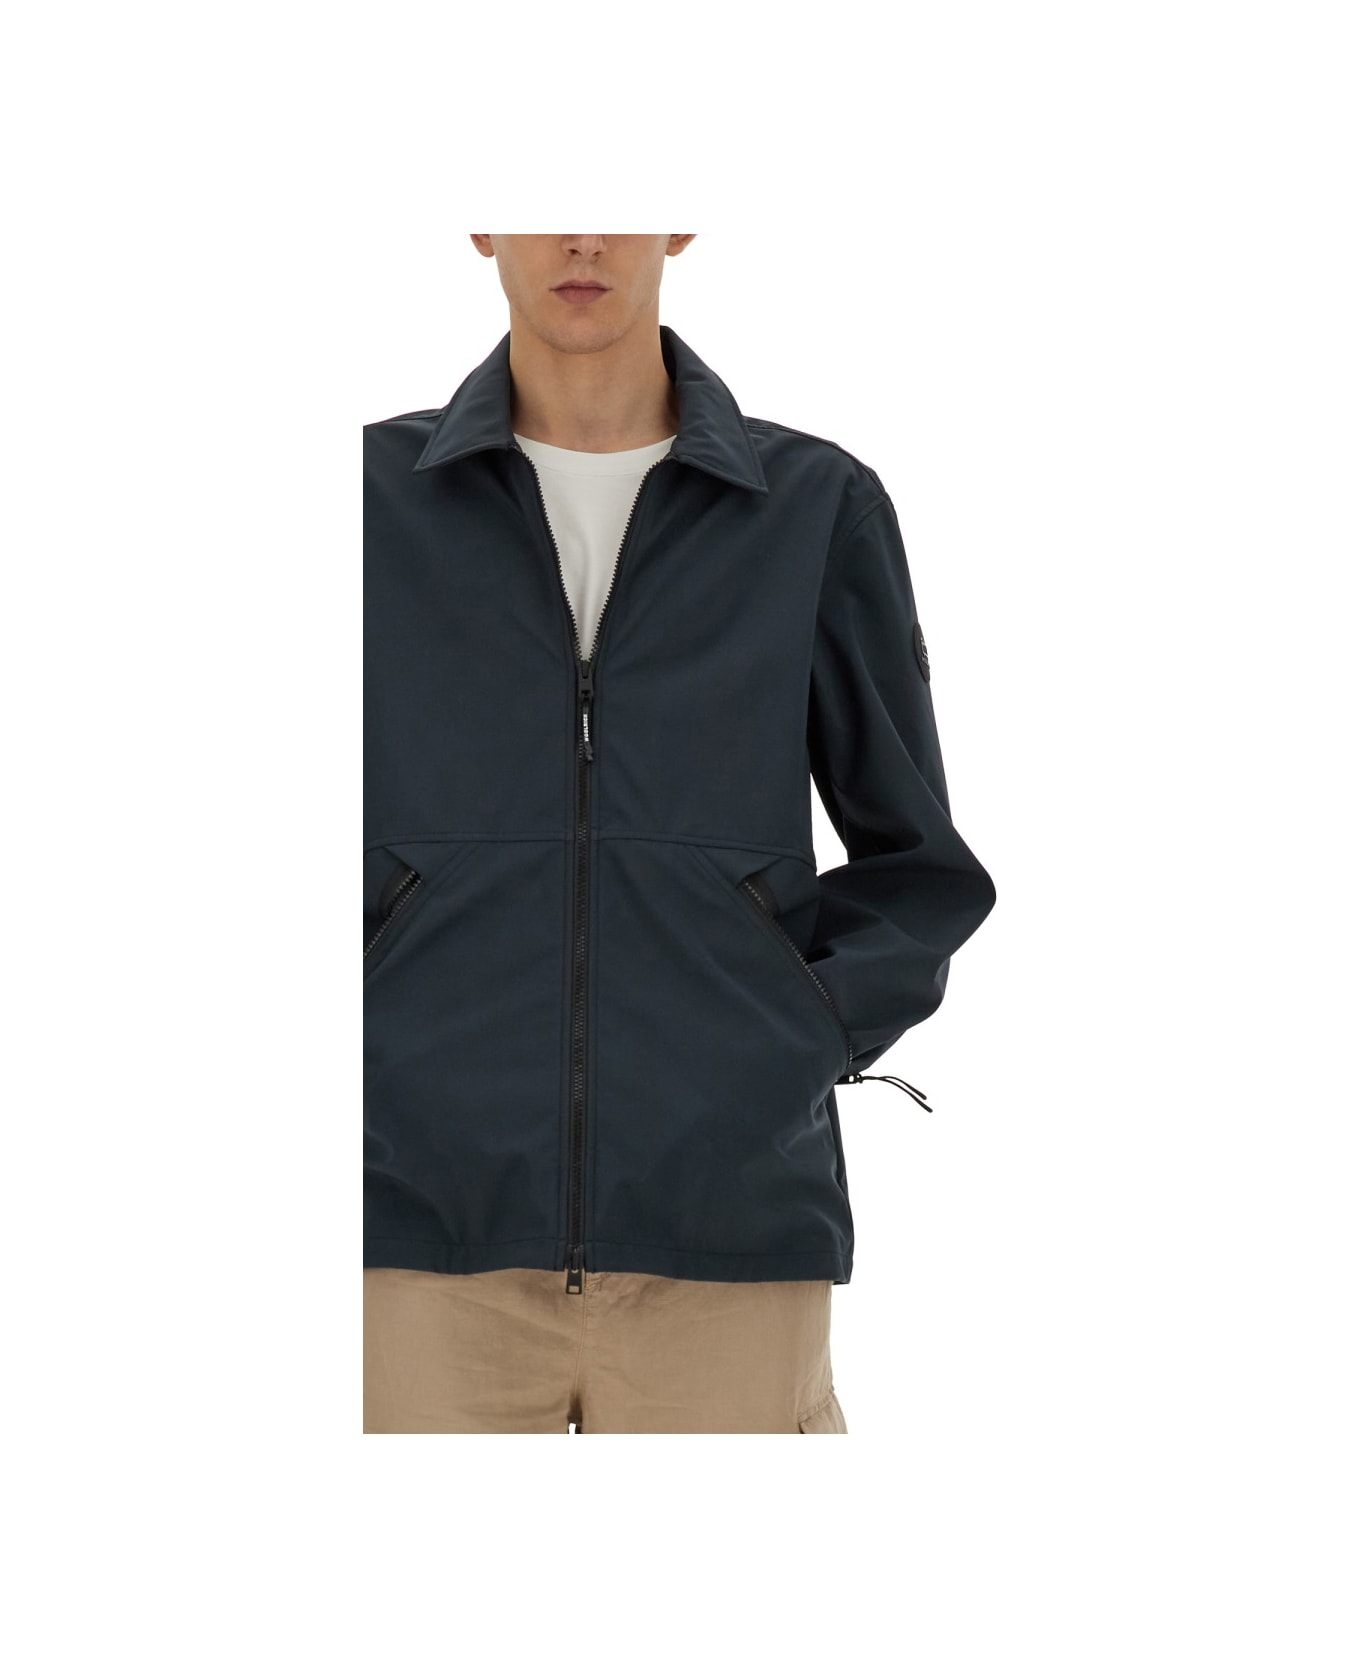 Woolrich Jacket With Logo - Melton Blue